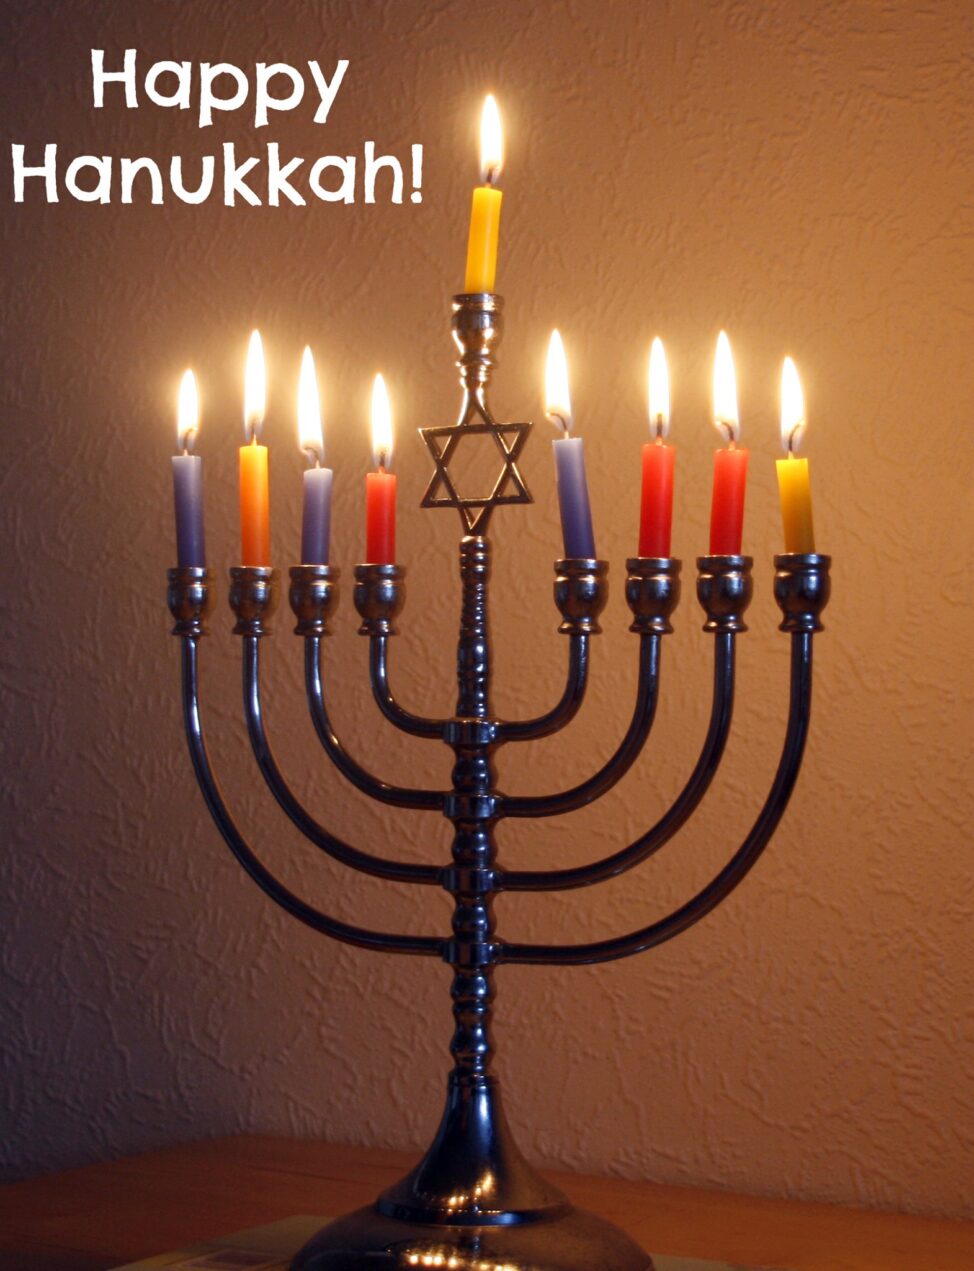 Wishing a peaceful and happy Hanukkah to all who celebrate!
 #Hanukkah #Chanukah